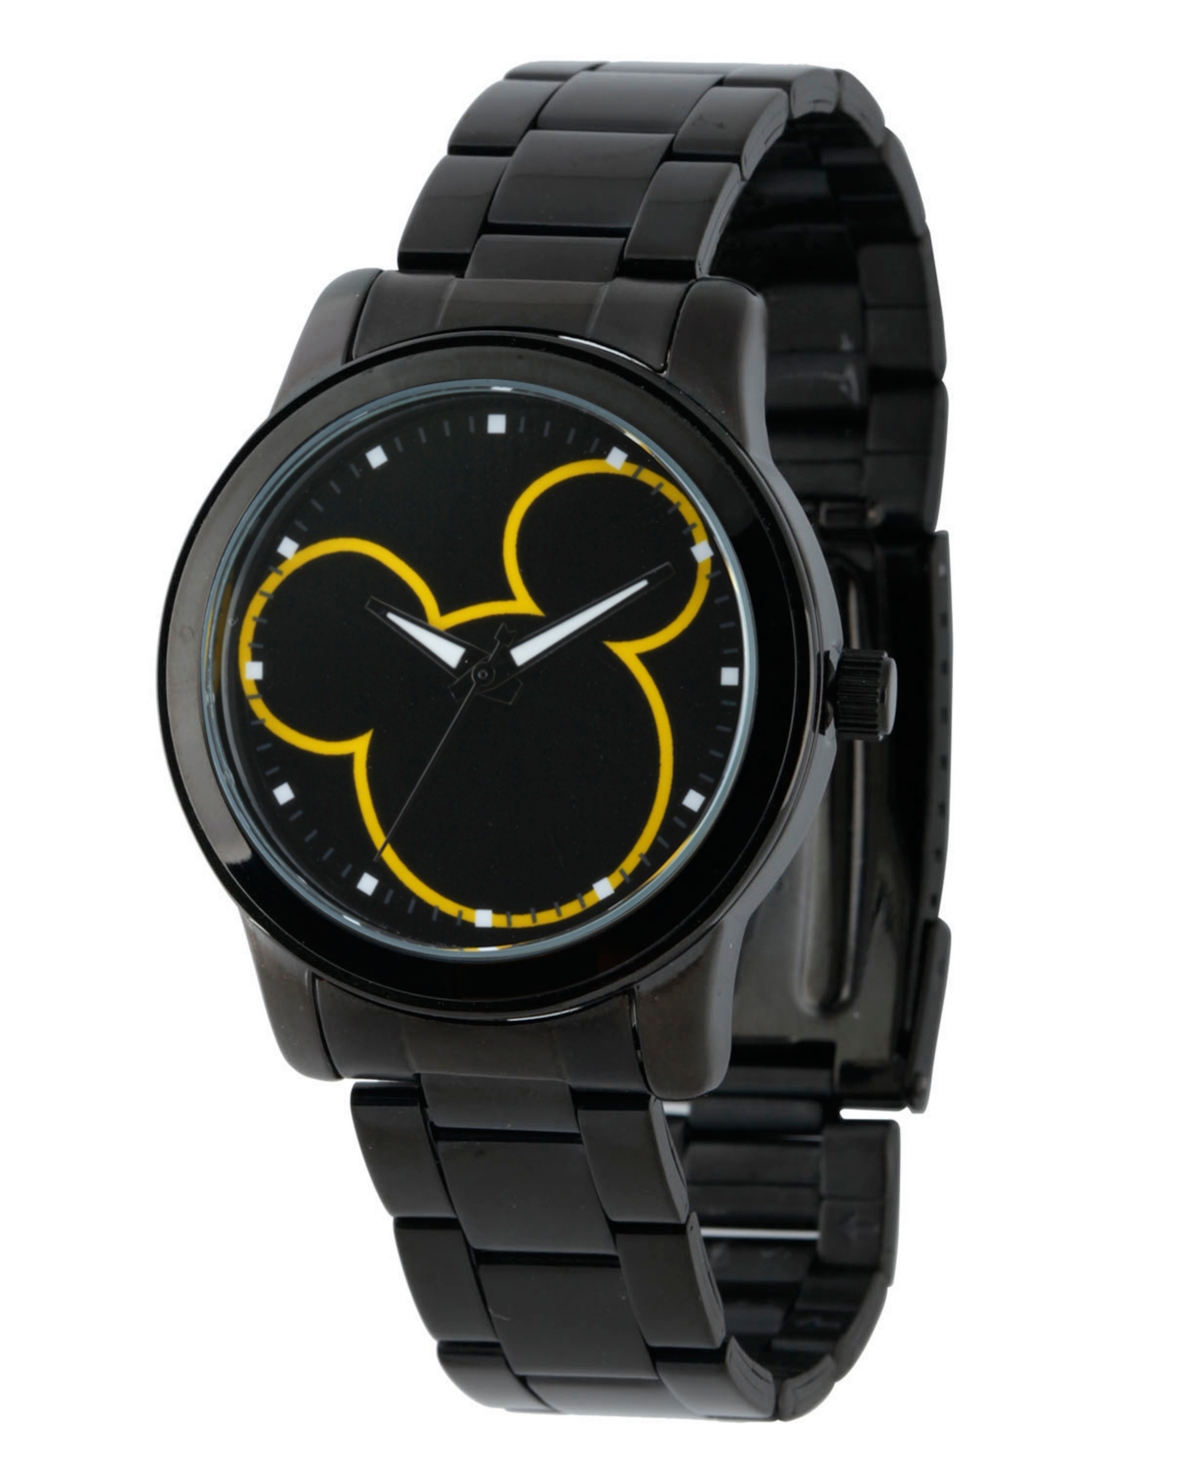 Ewatchfactory Disney Mickey Mouse Men's Black Alloy Watch